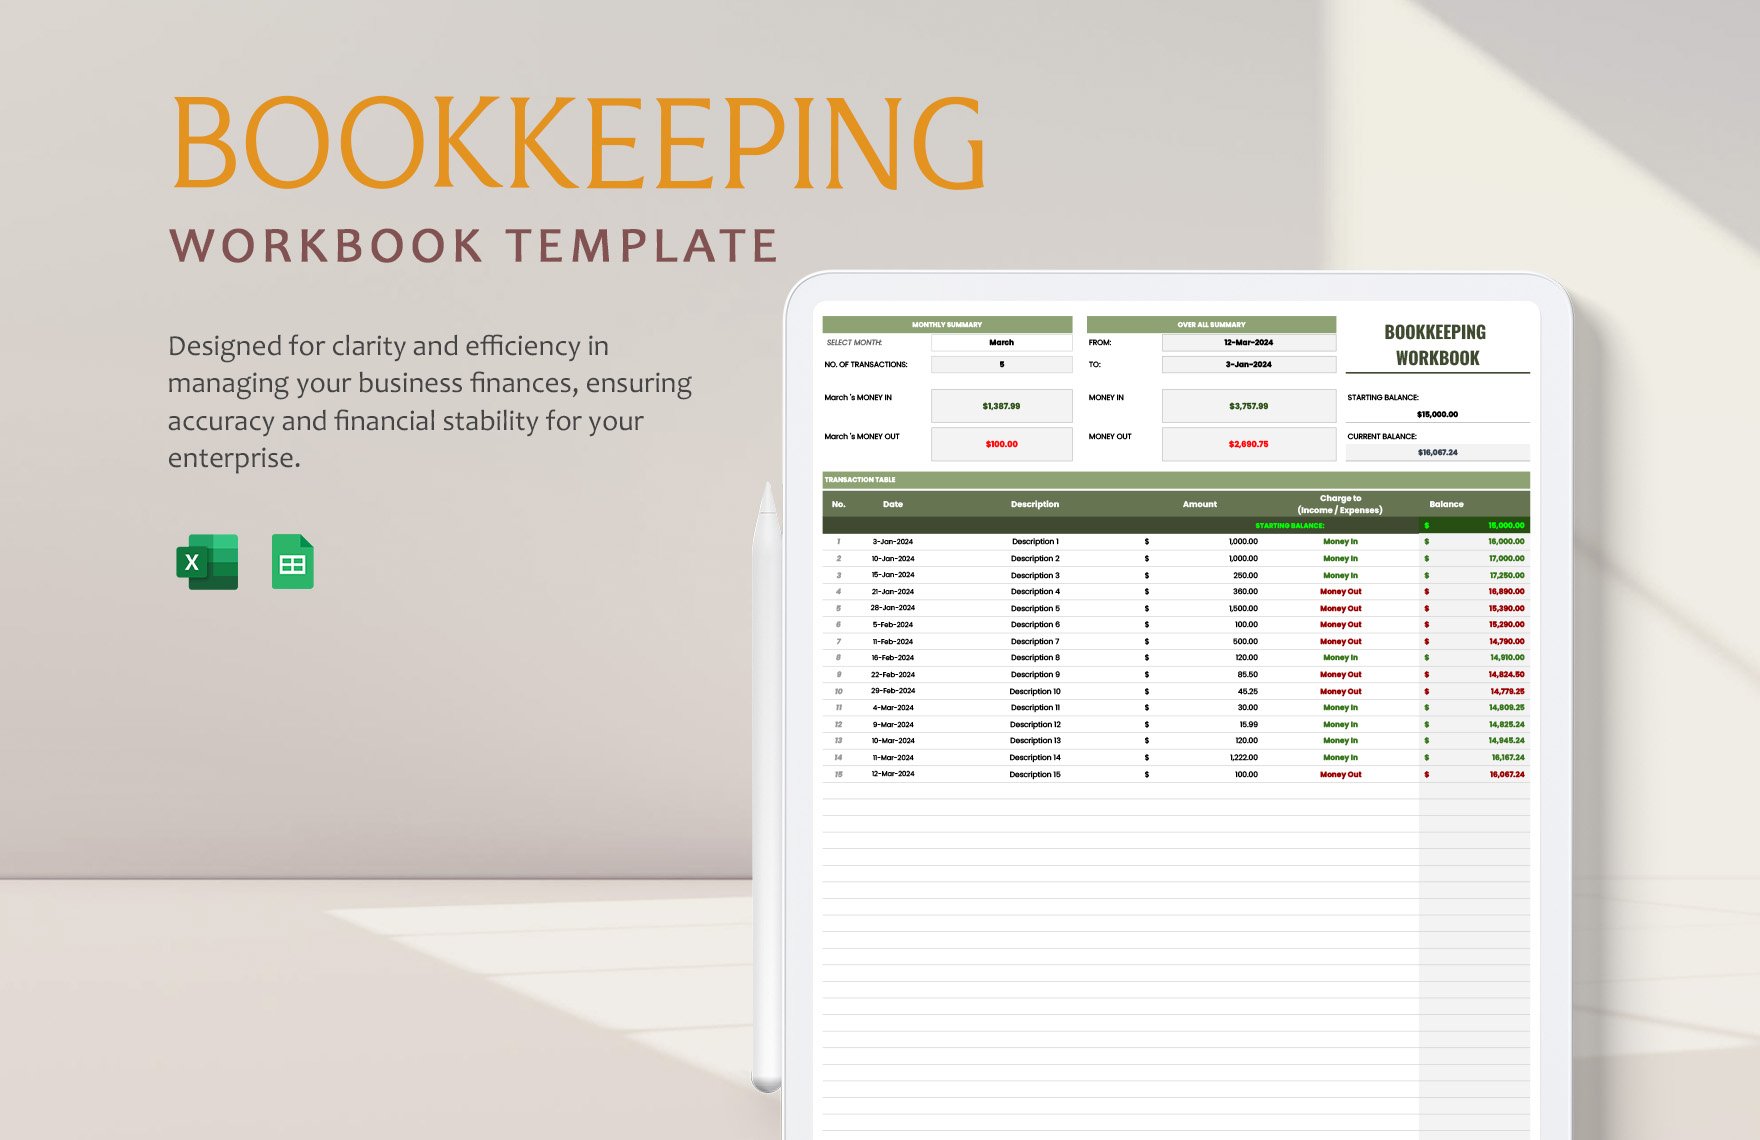 Bookkeeping Workbook Template in Excel, Google Sheets